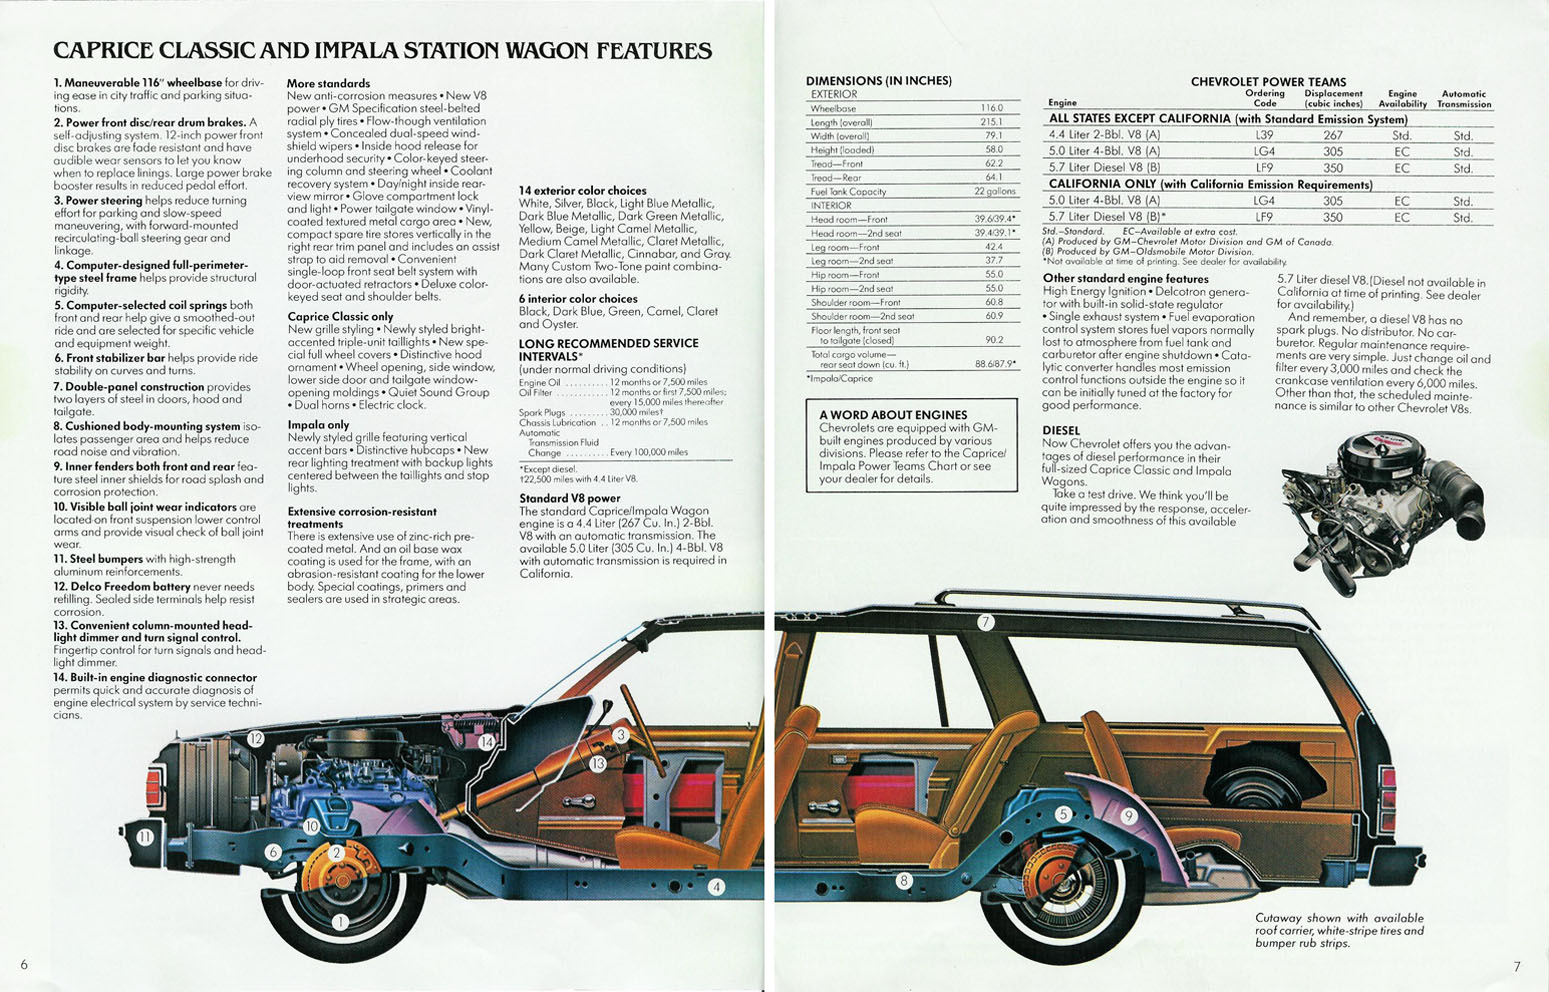 1980 Chevrolet Wagons-06-07